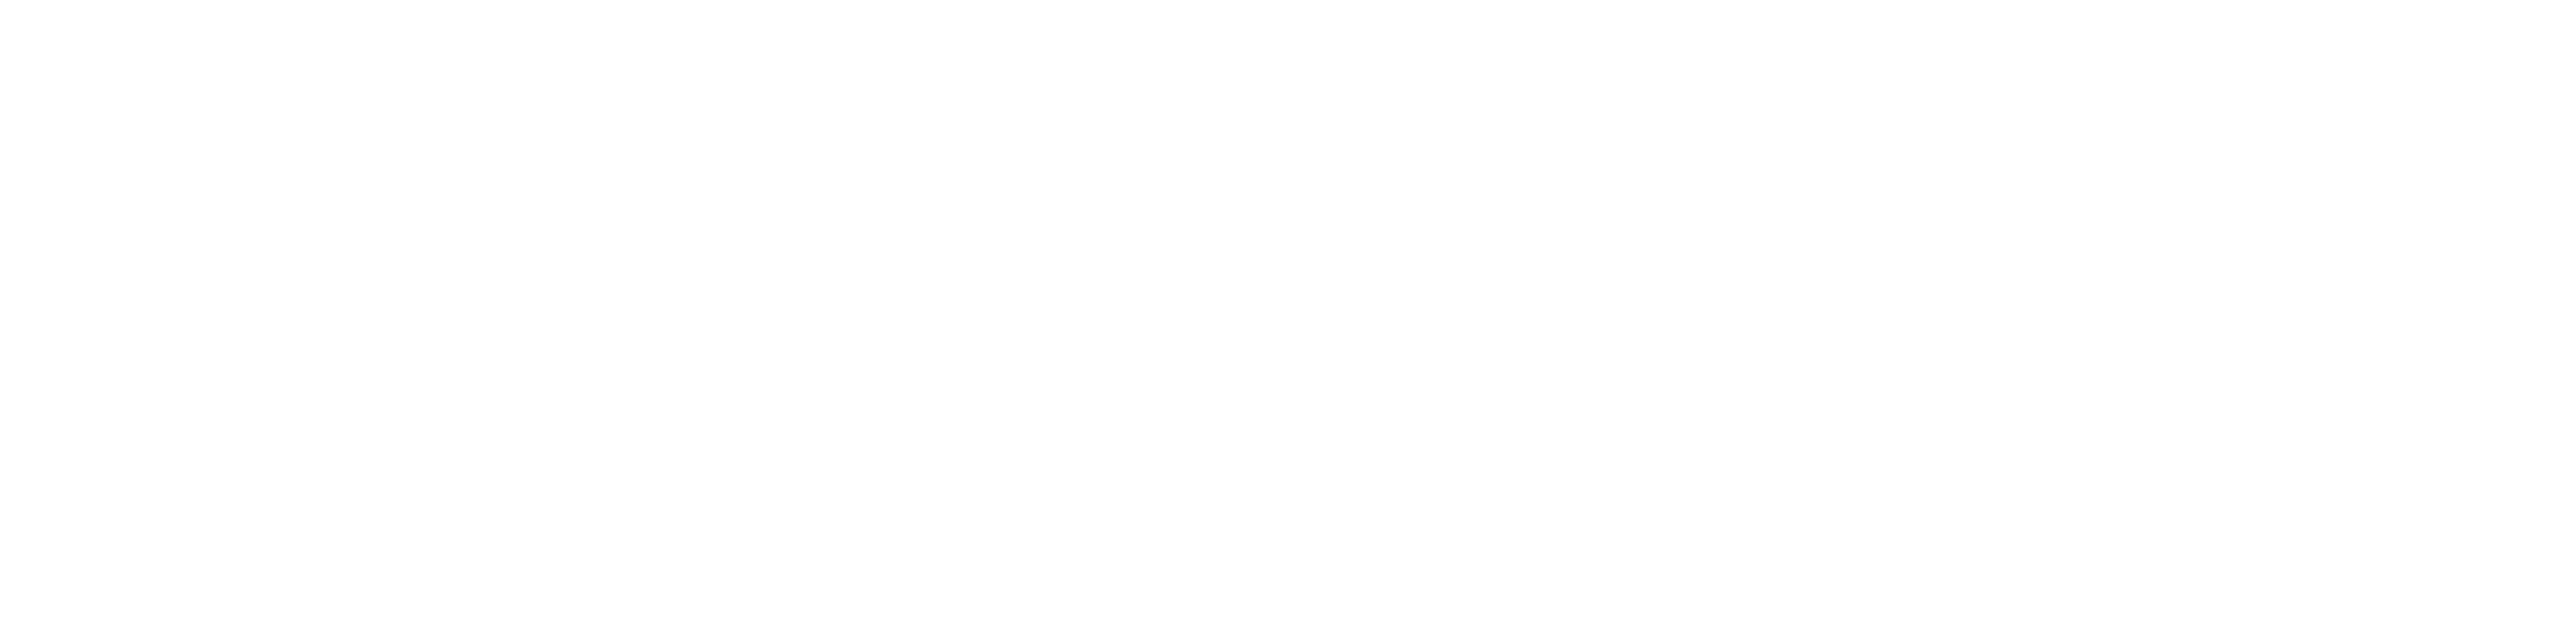 northrop-grumman-logo